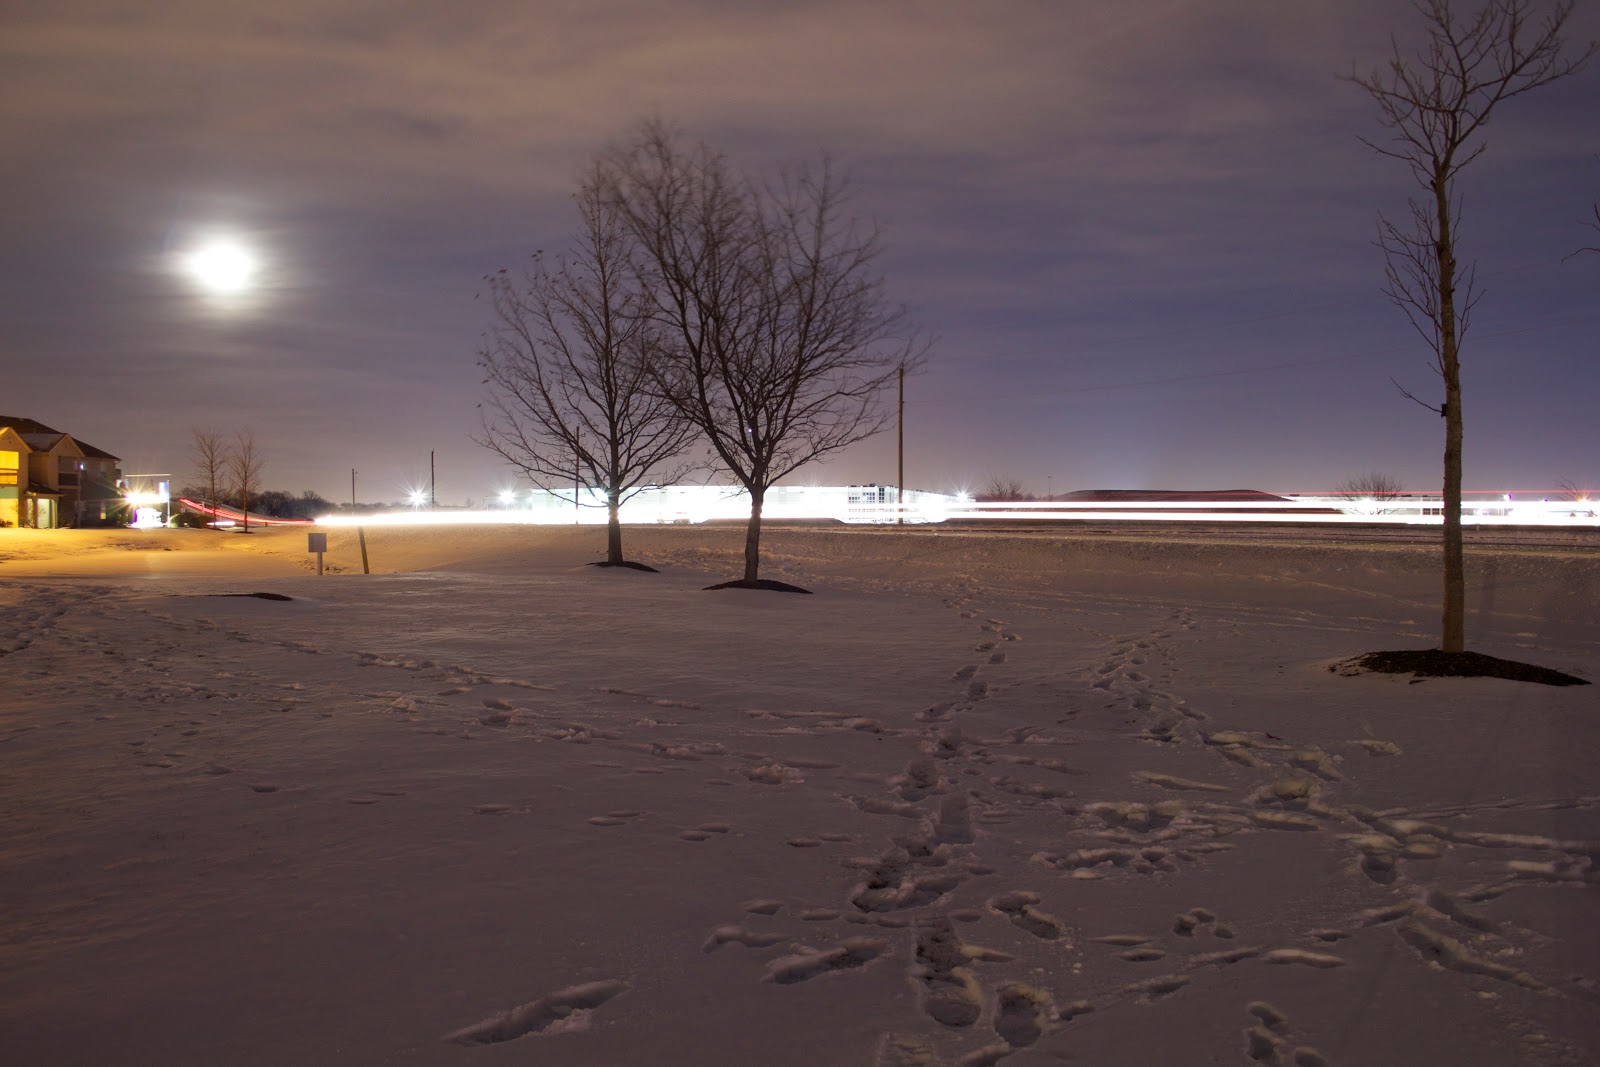 footprints in snow at night